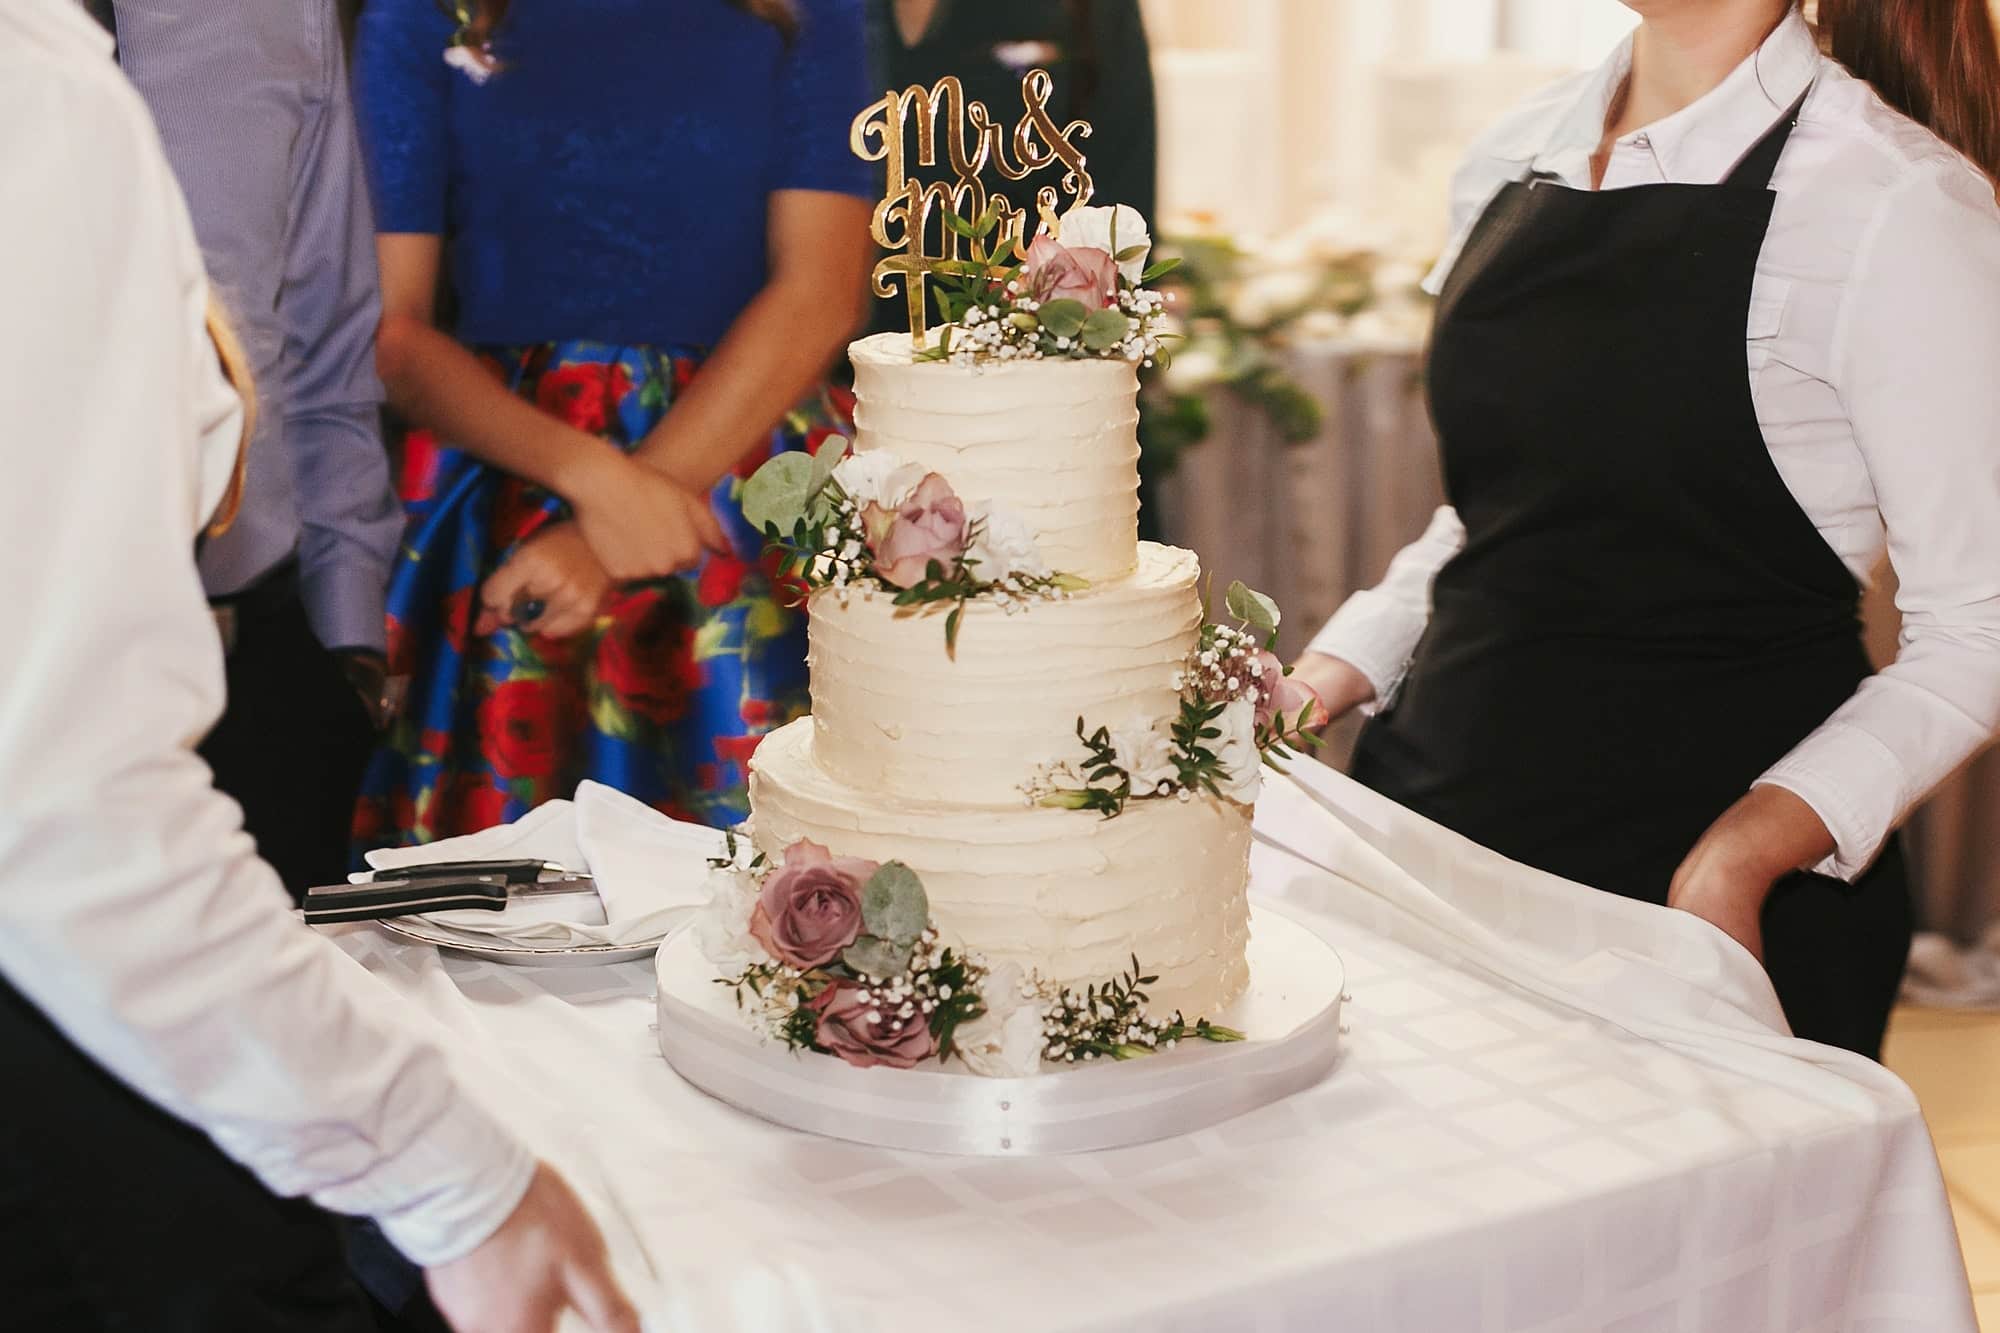 Modern wedding cake at wedding reception